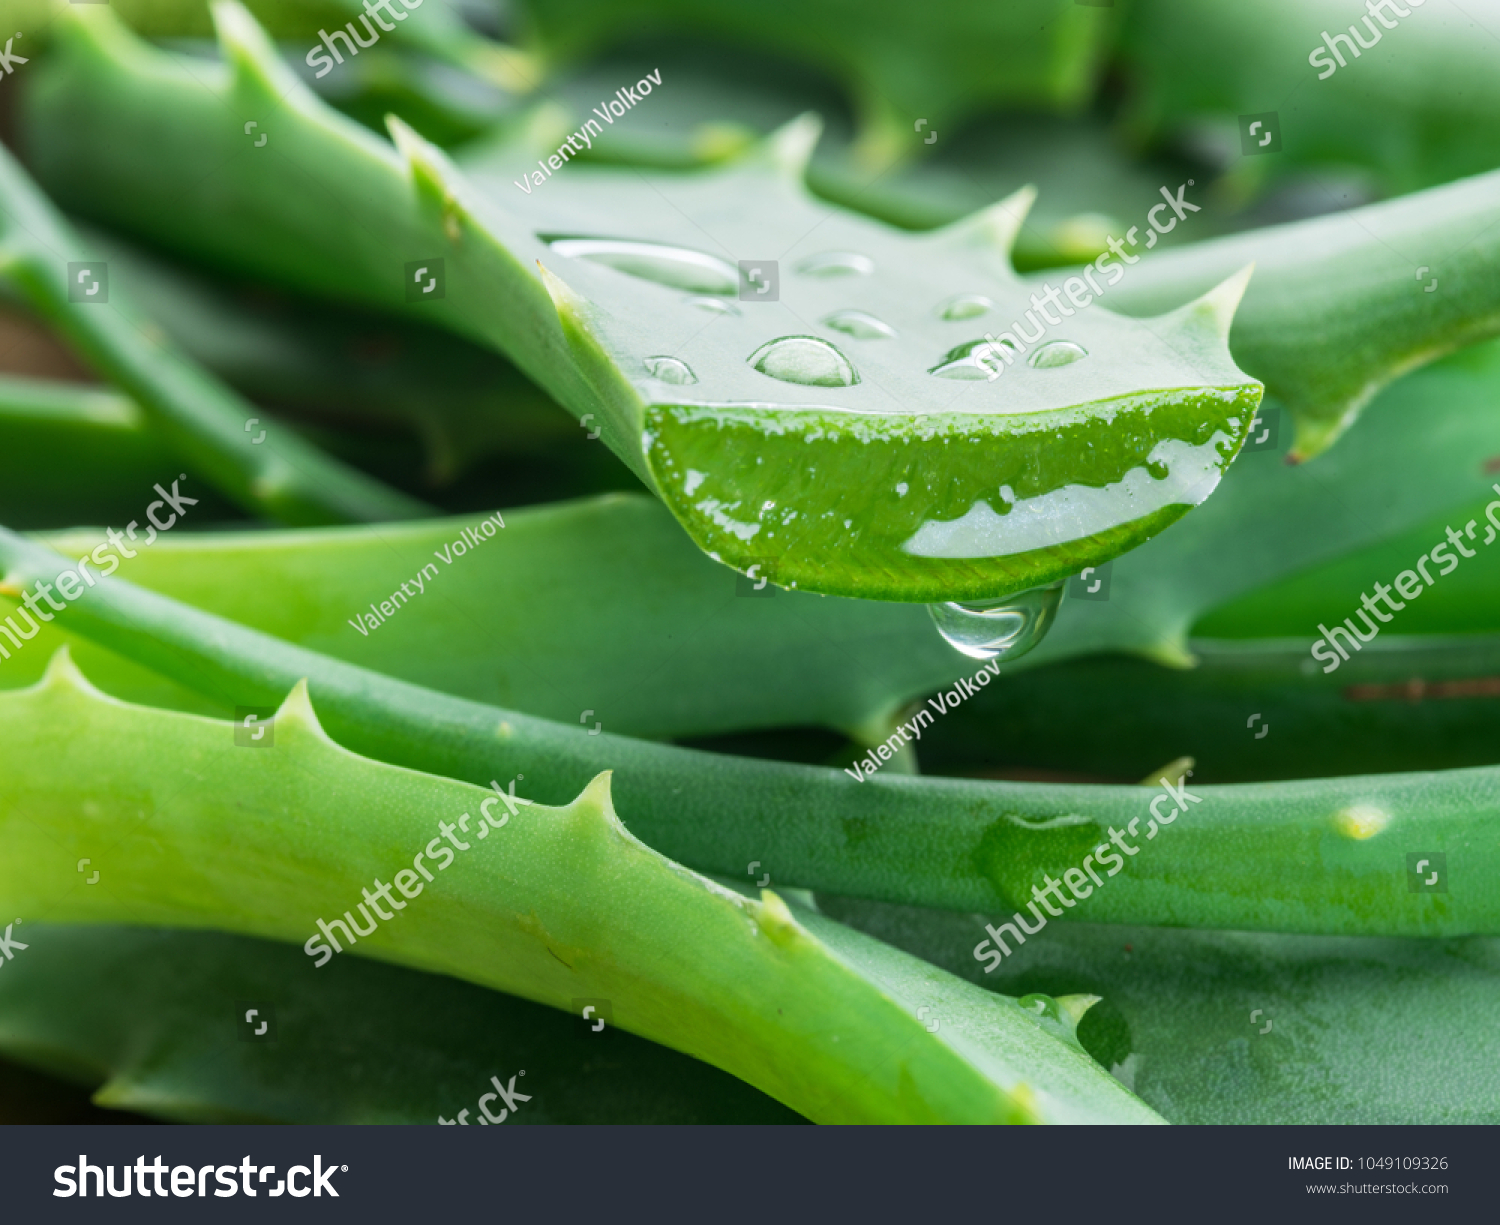 Aloe or Aloe vera fresh leaves and slices on white background. #1049109326